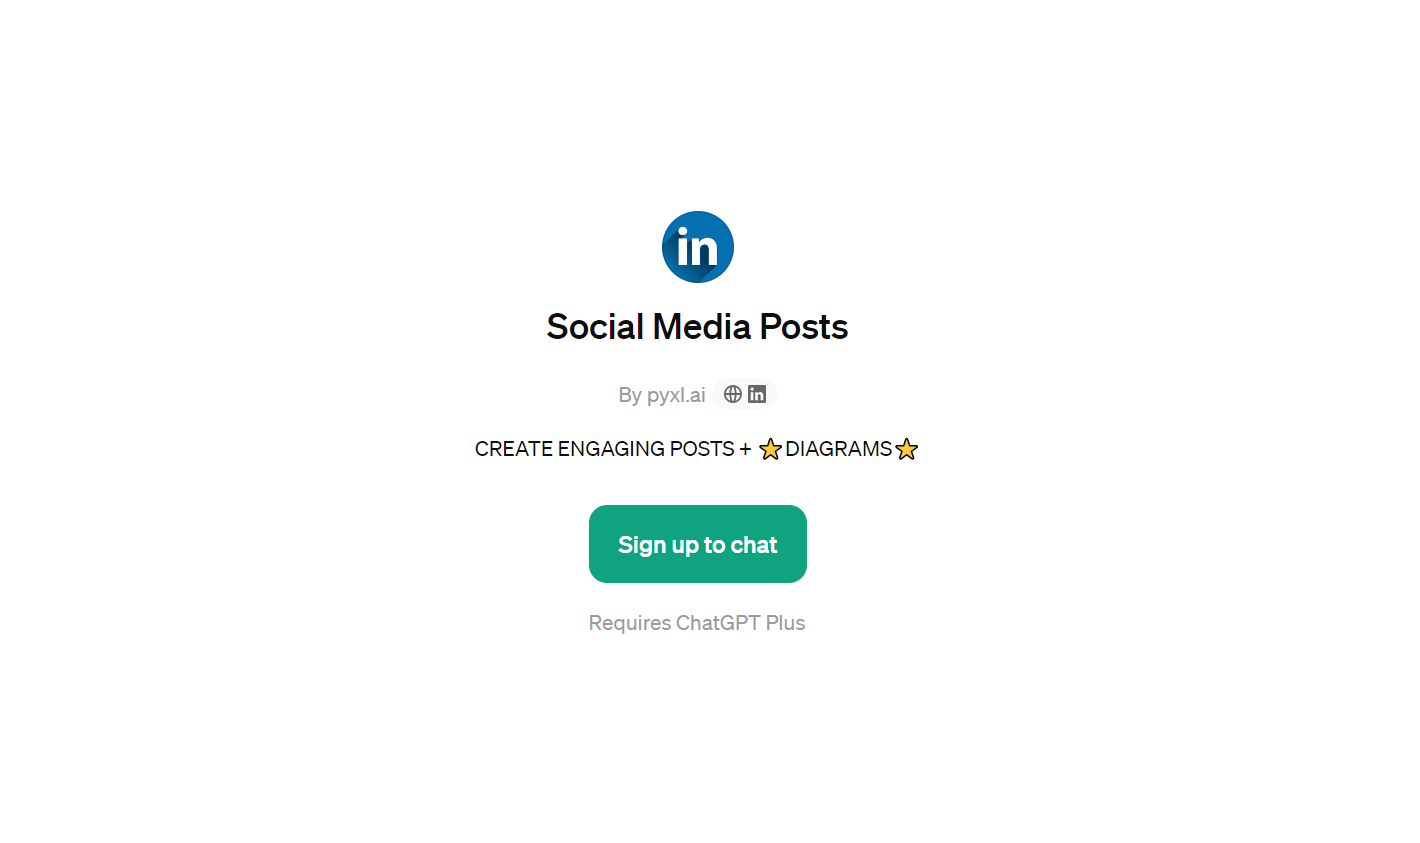  Social Media Posts - Generate Engaging Posts and Diagrams